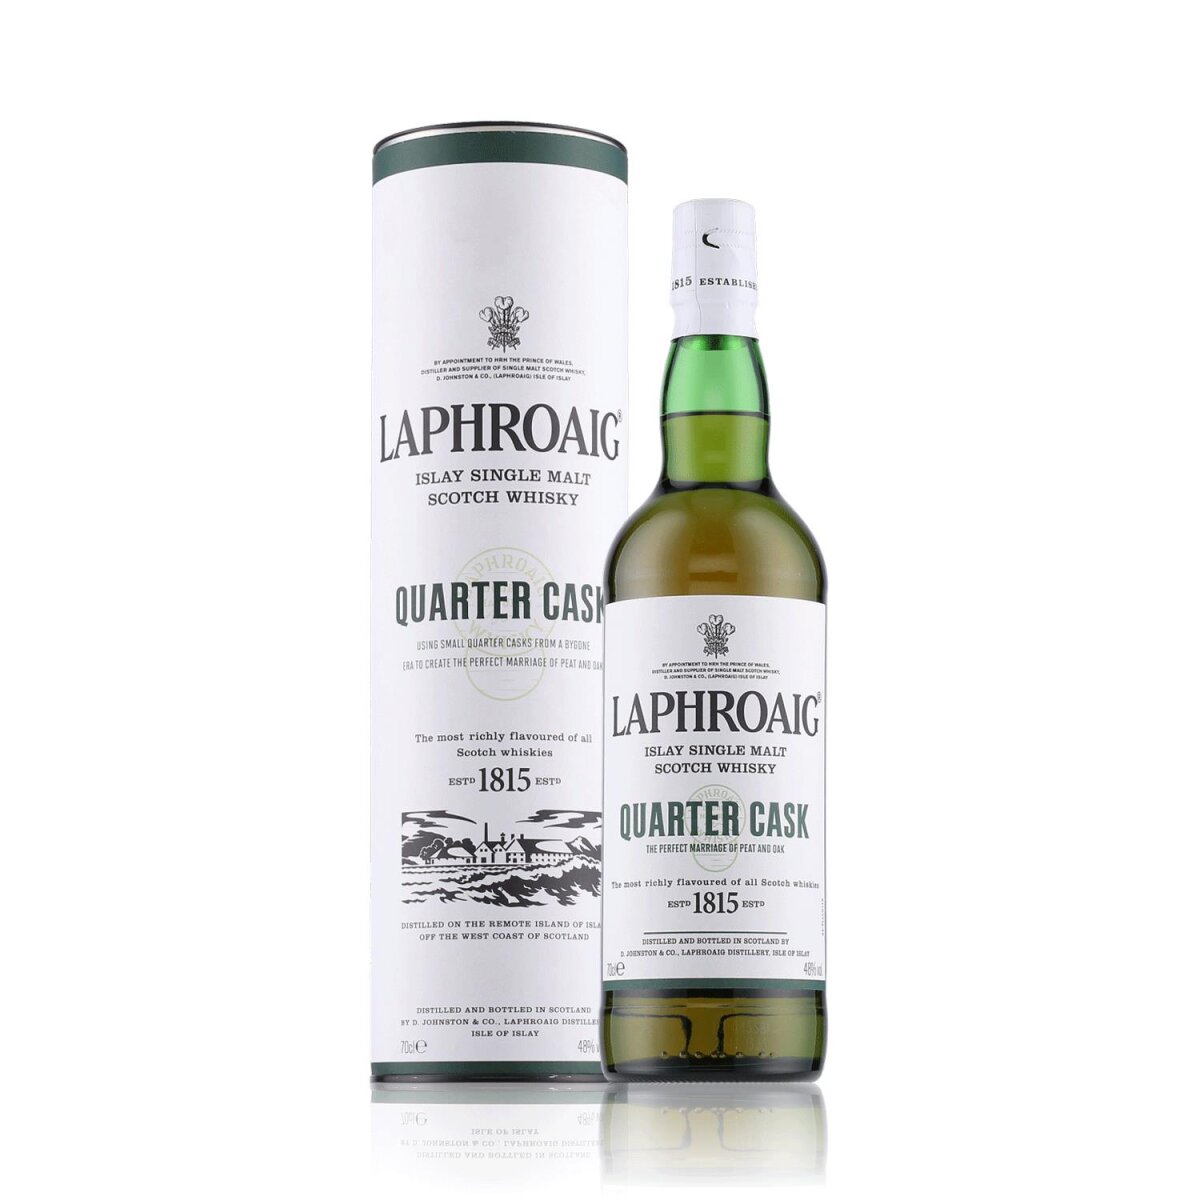 Laphroaig Quarter Cask Whisky 48% € 0,7l 38,69 in Geschenkbox, Vol